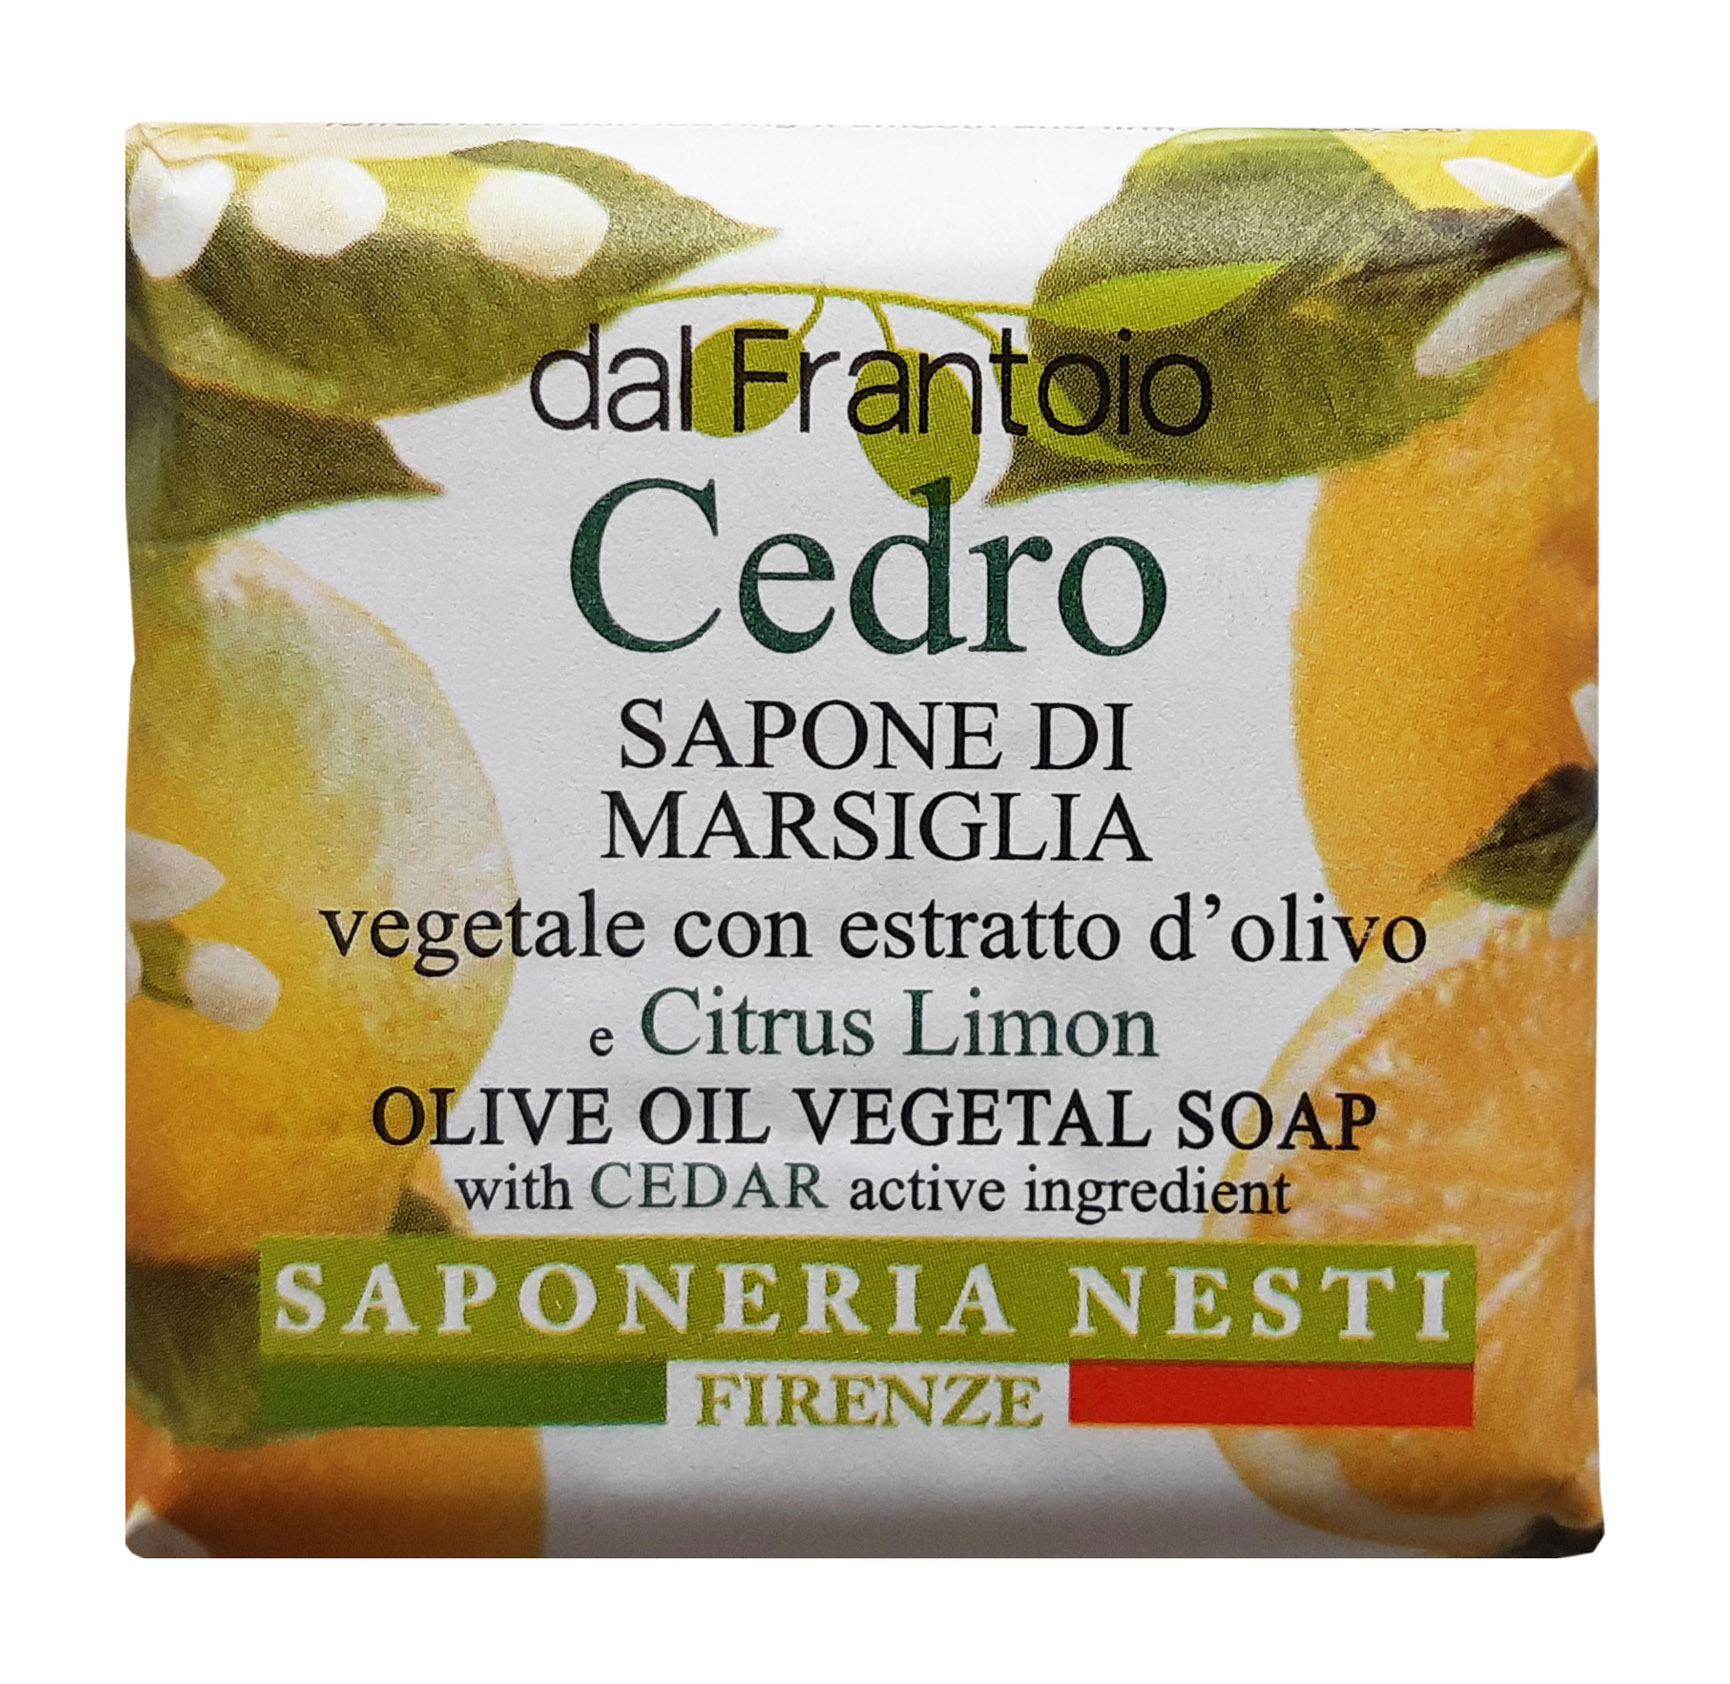 Мыло NESTI DANTE Dal Frantoio Cedro Olive Oil Vegetal Soap 100 г косметическое мыло nesti dante regina di peonie vegetal soap 250 г